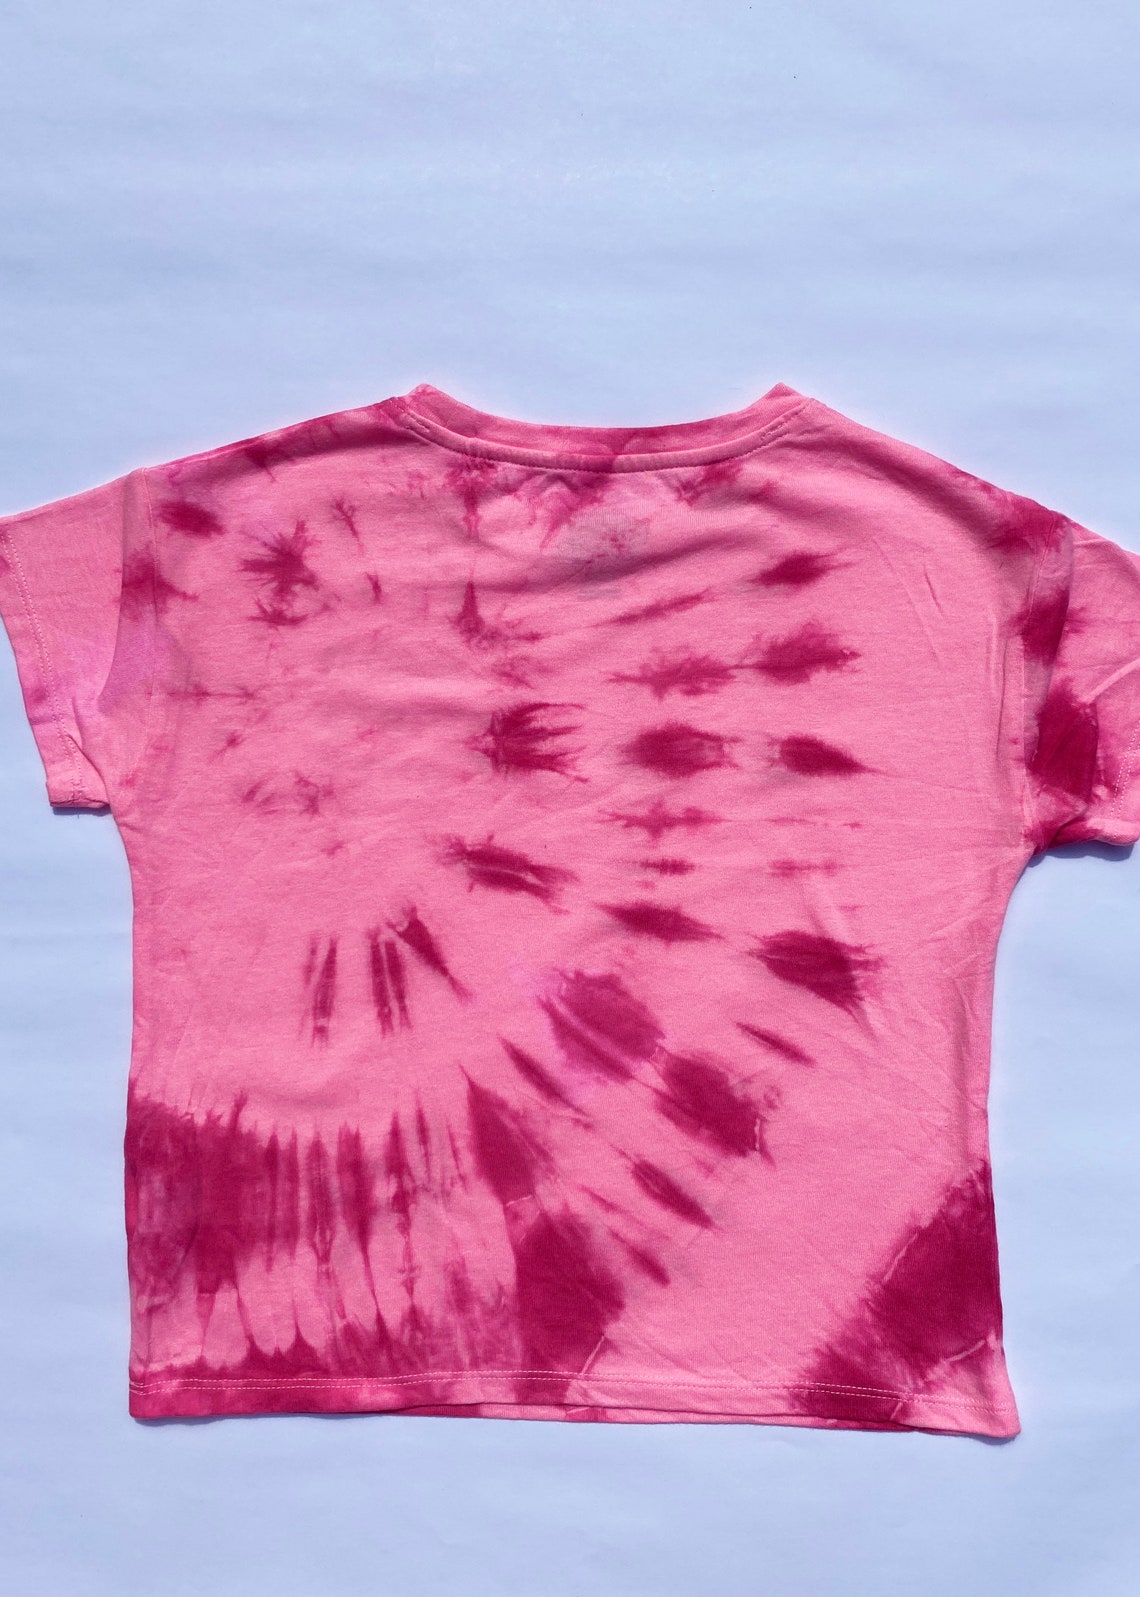 Girls Tie Dye Shirt // Girls Tie Dye Graphic Tee Shirt // - Etsy